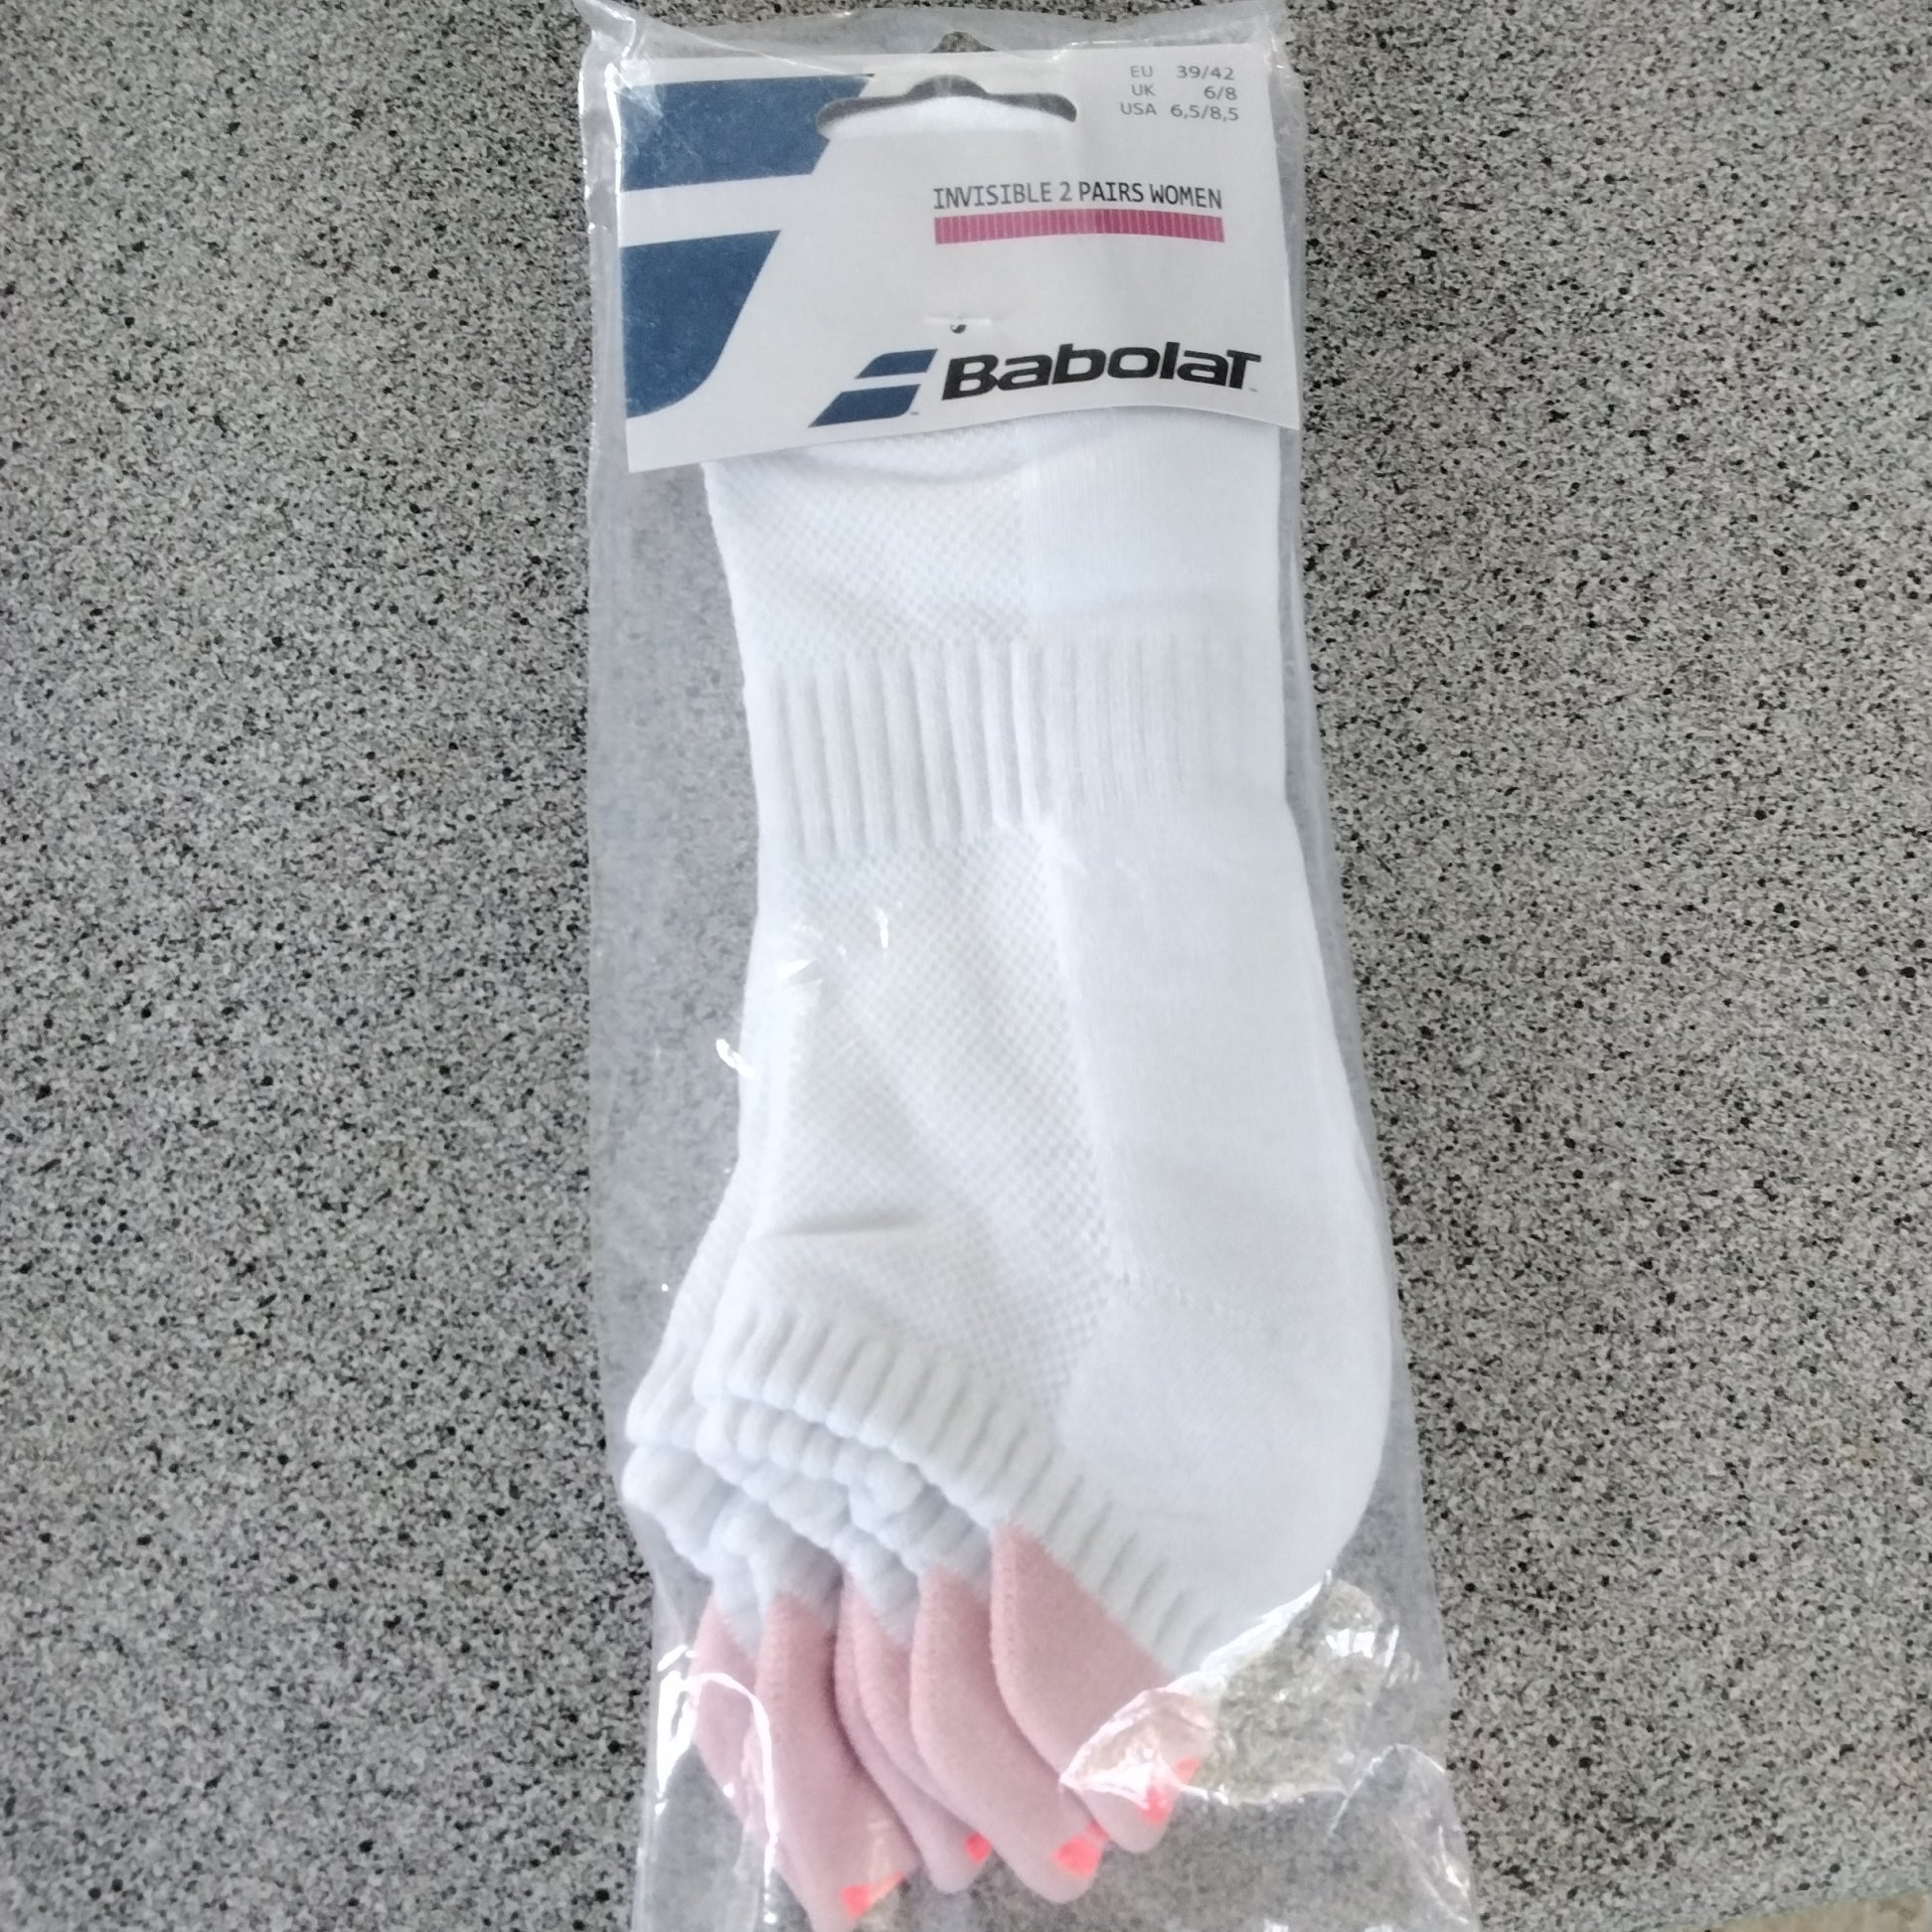 Babolat woman pink socks